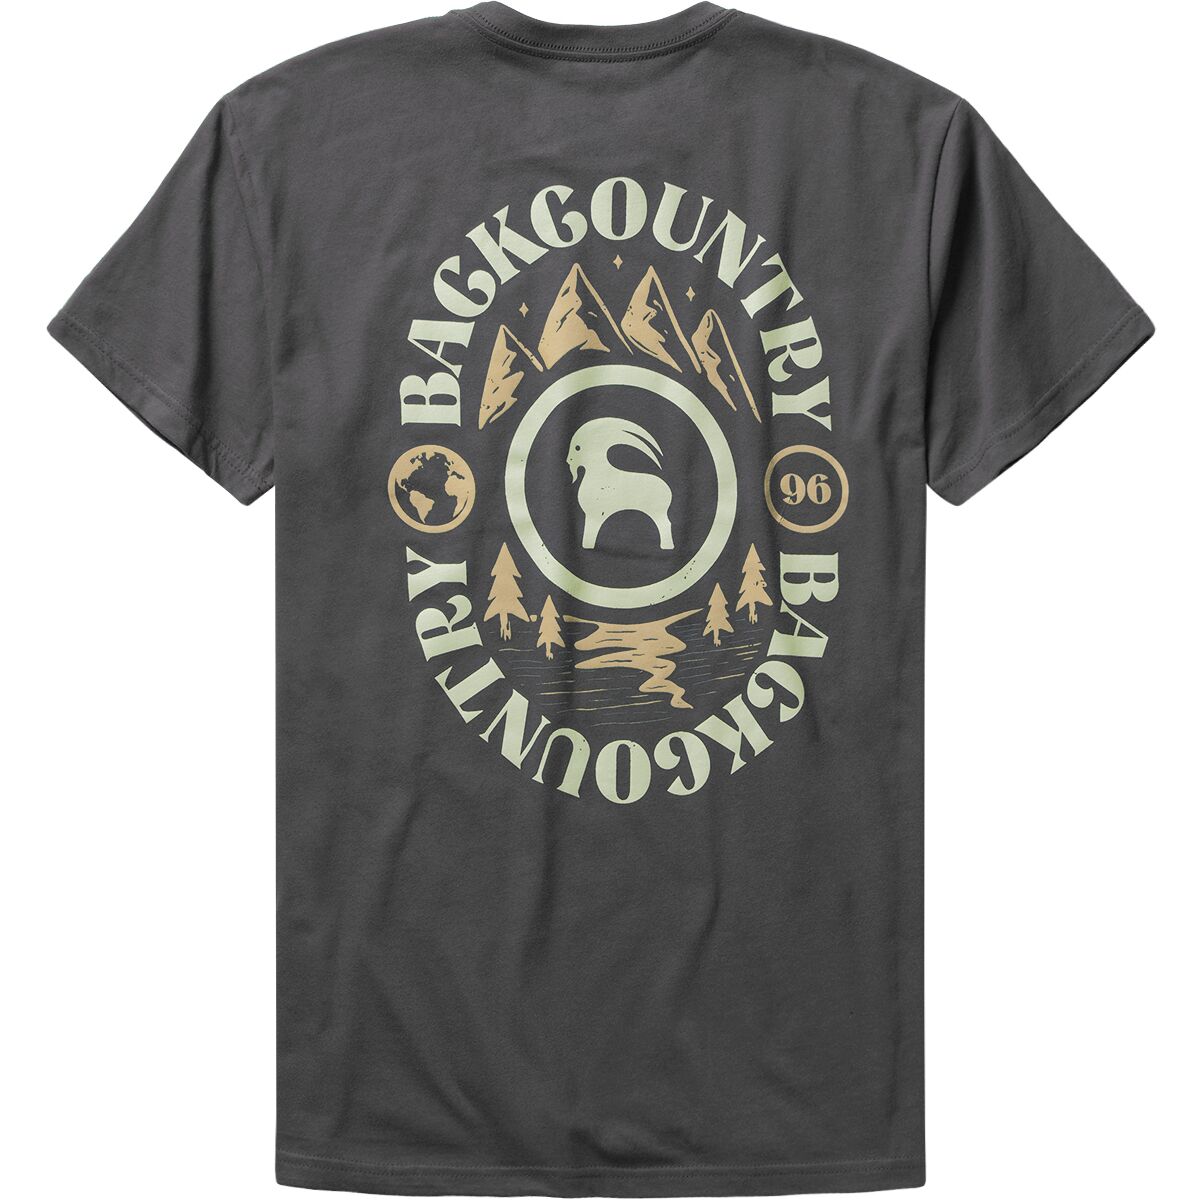 Backcountry BC 96 T-Shirt - Men's